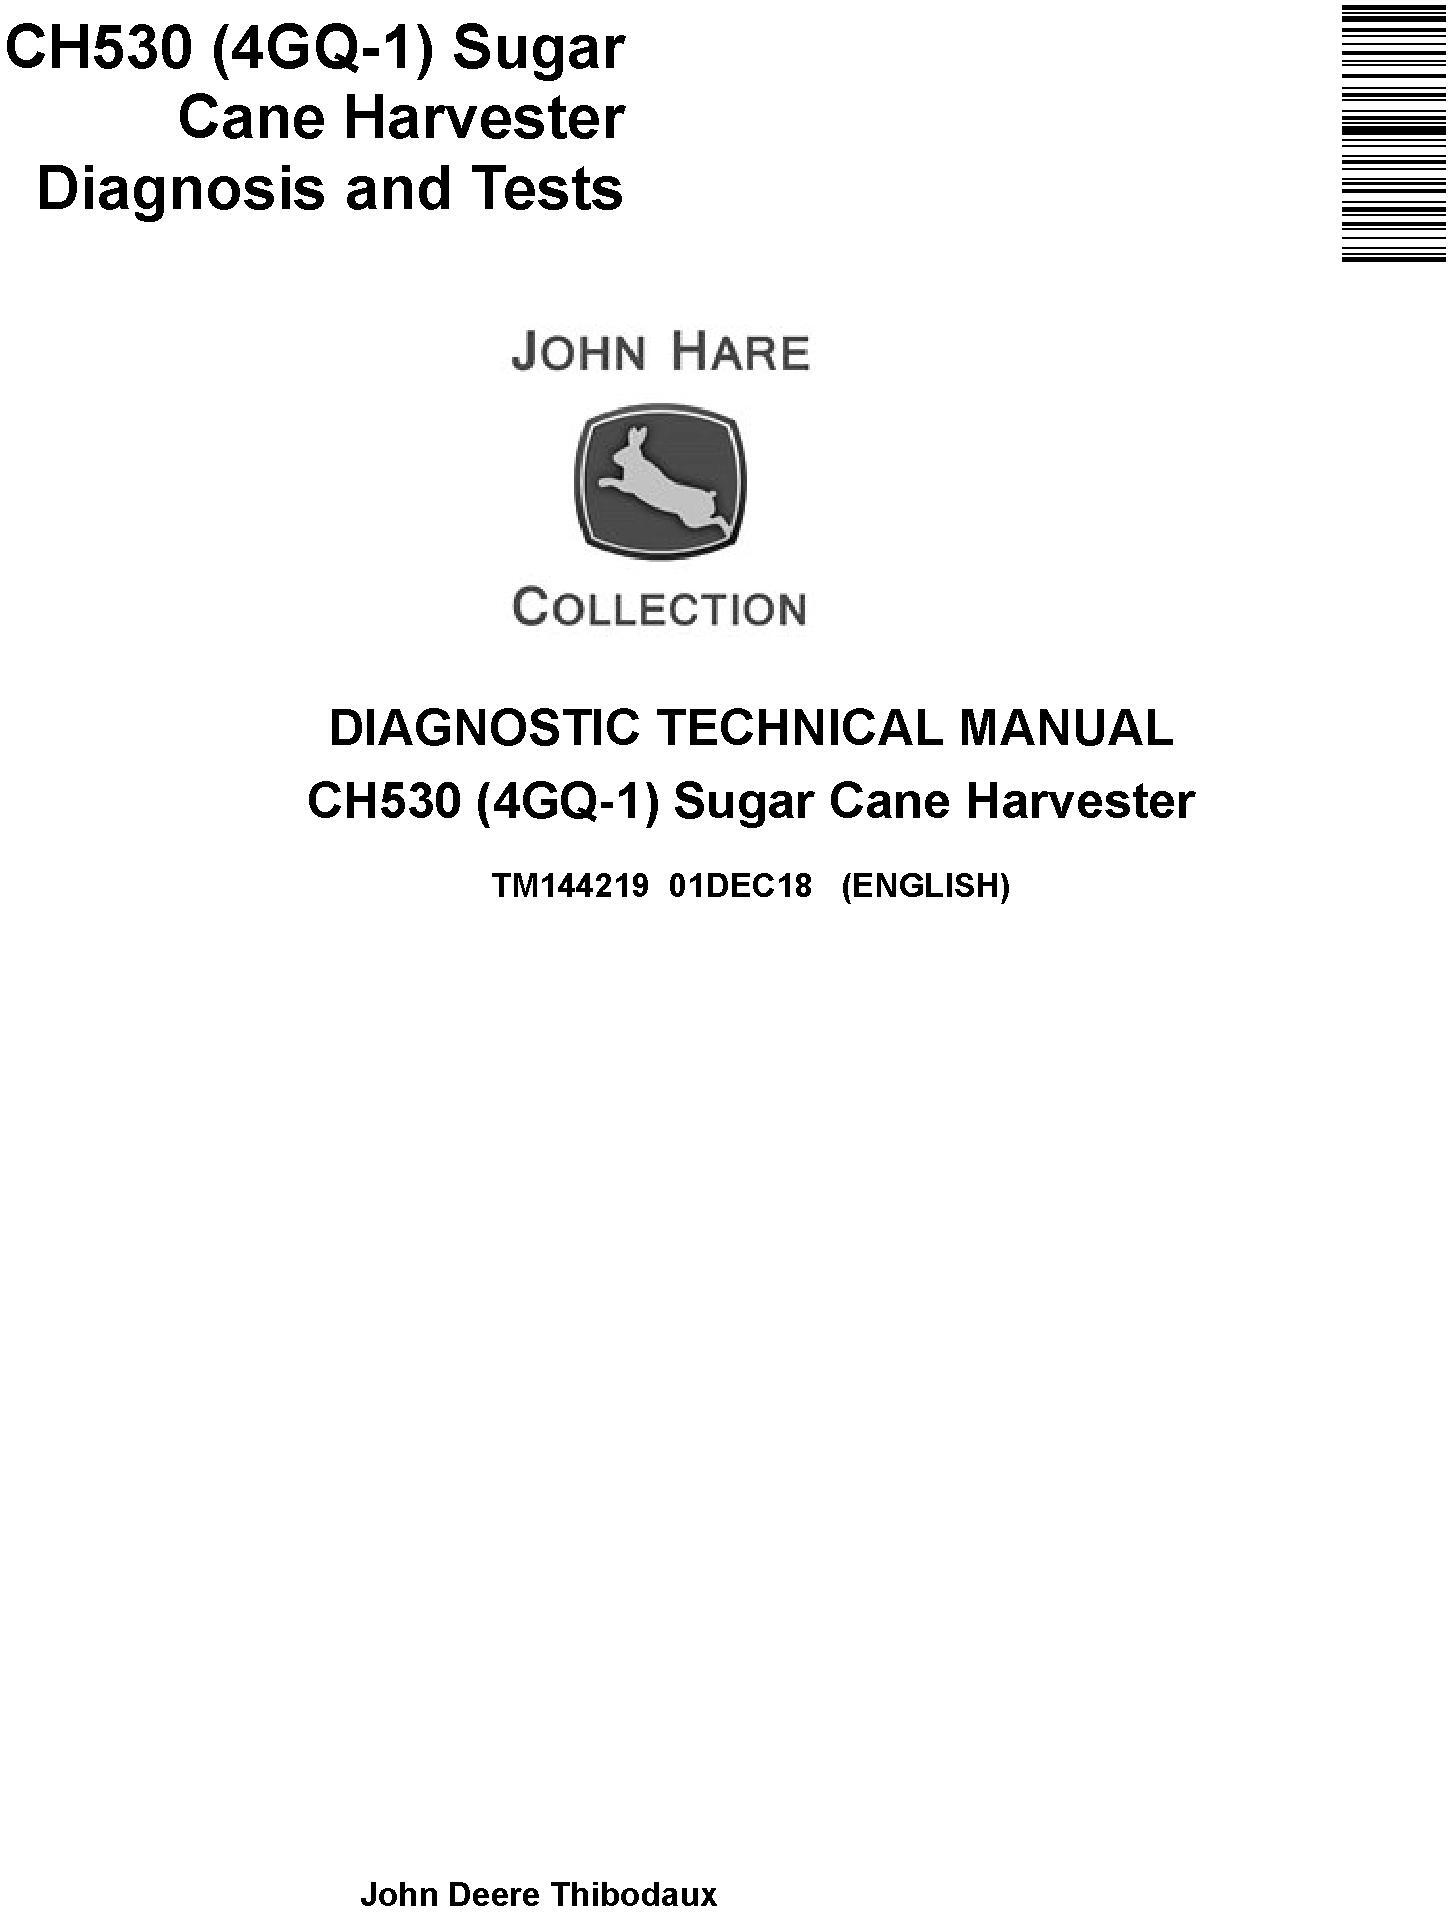 John Deere CH530 4GQ-1 Sugar Cane Harvester Technical Manual TM144219